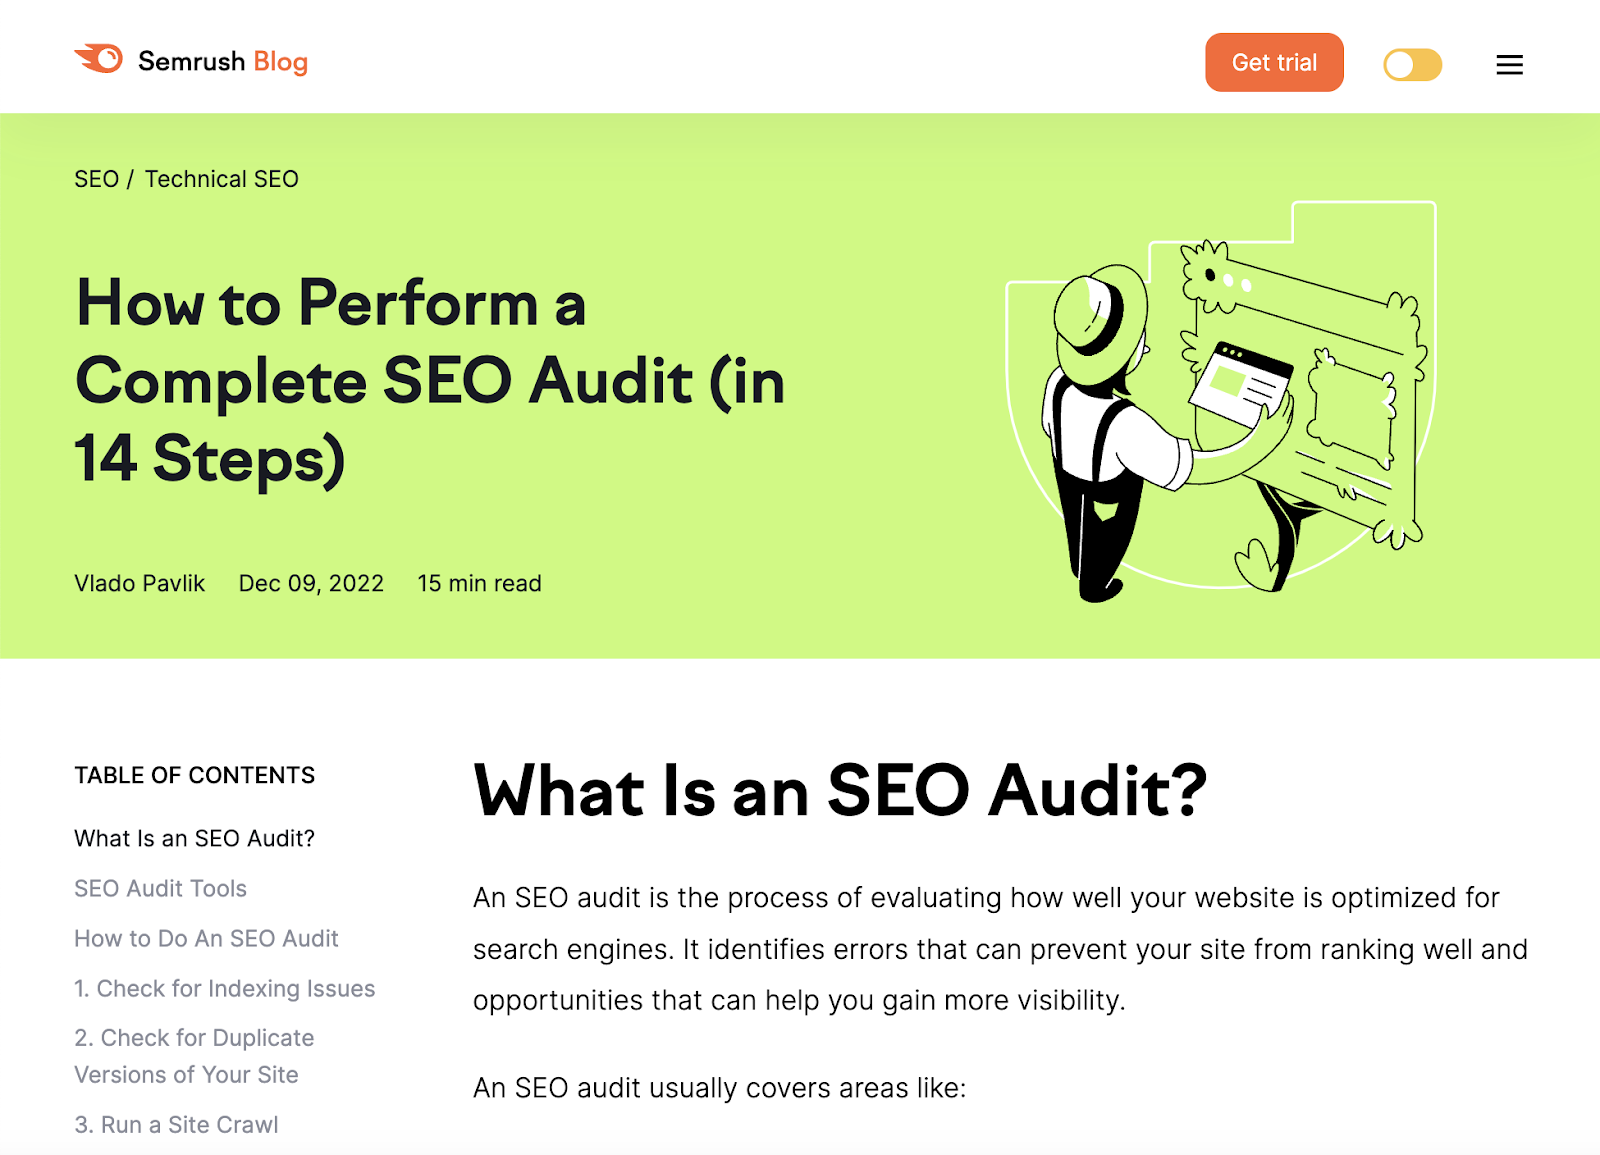 Semrush blog post on SEO audits page